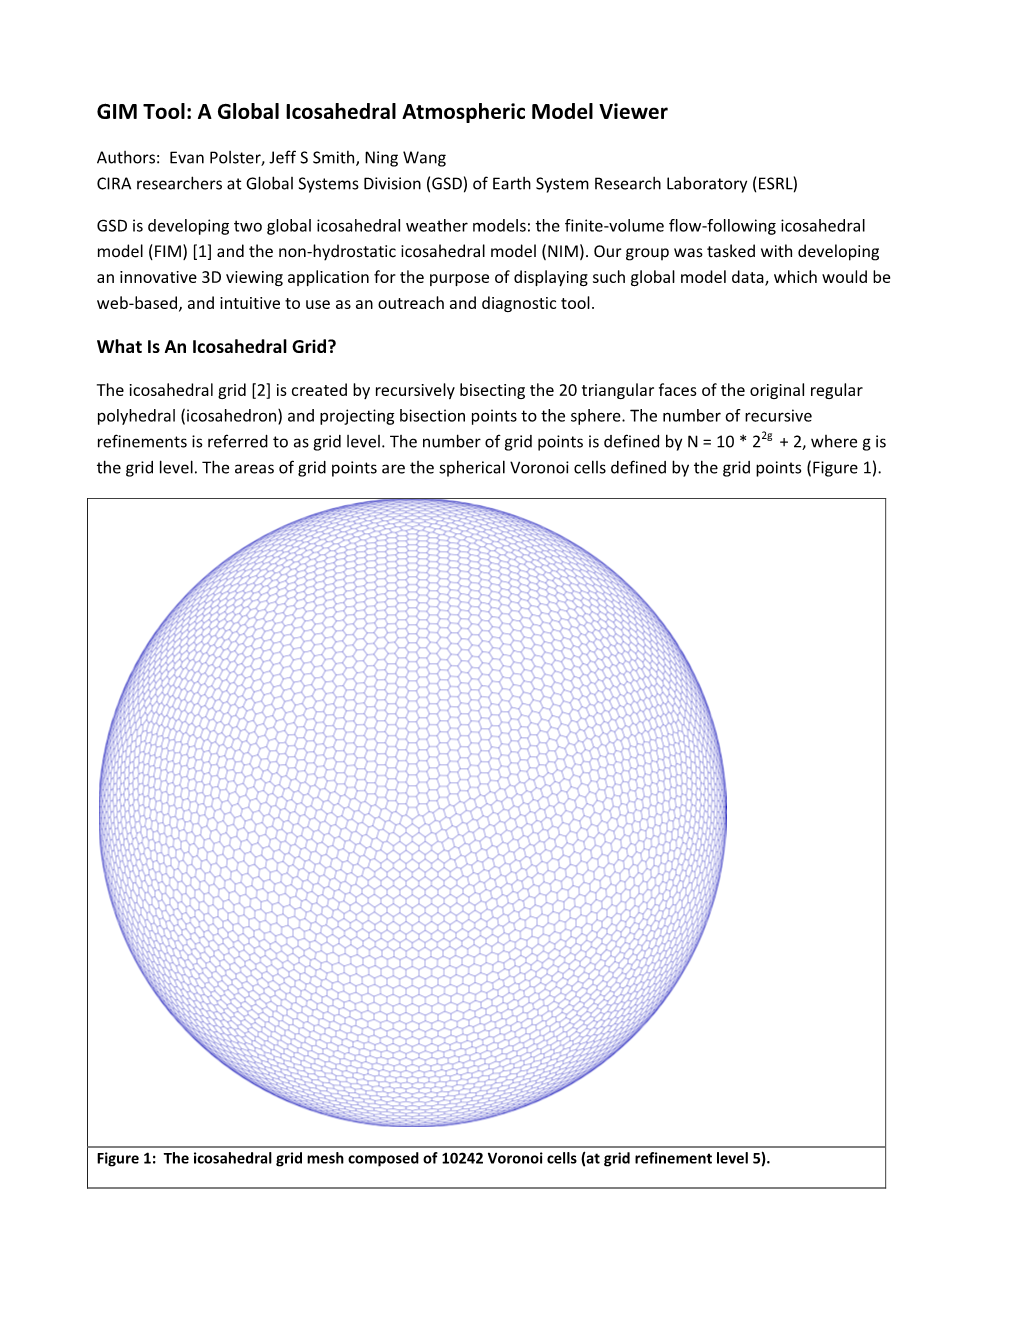 GIM Tool: a Global Icosahedral Atmospheric Model Viewer